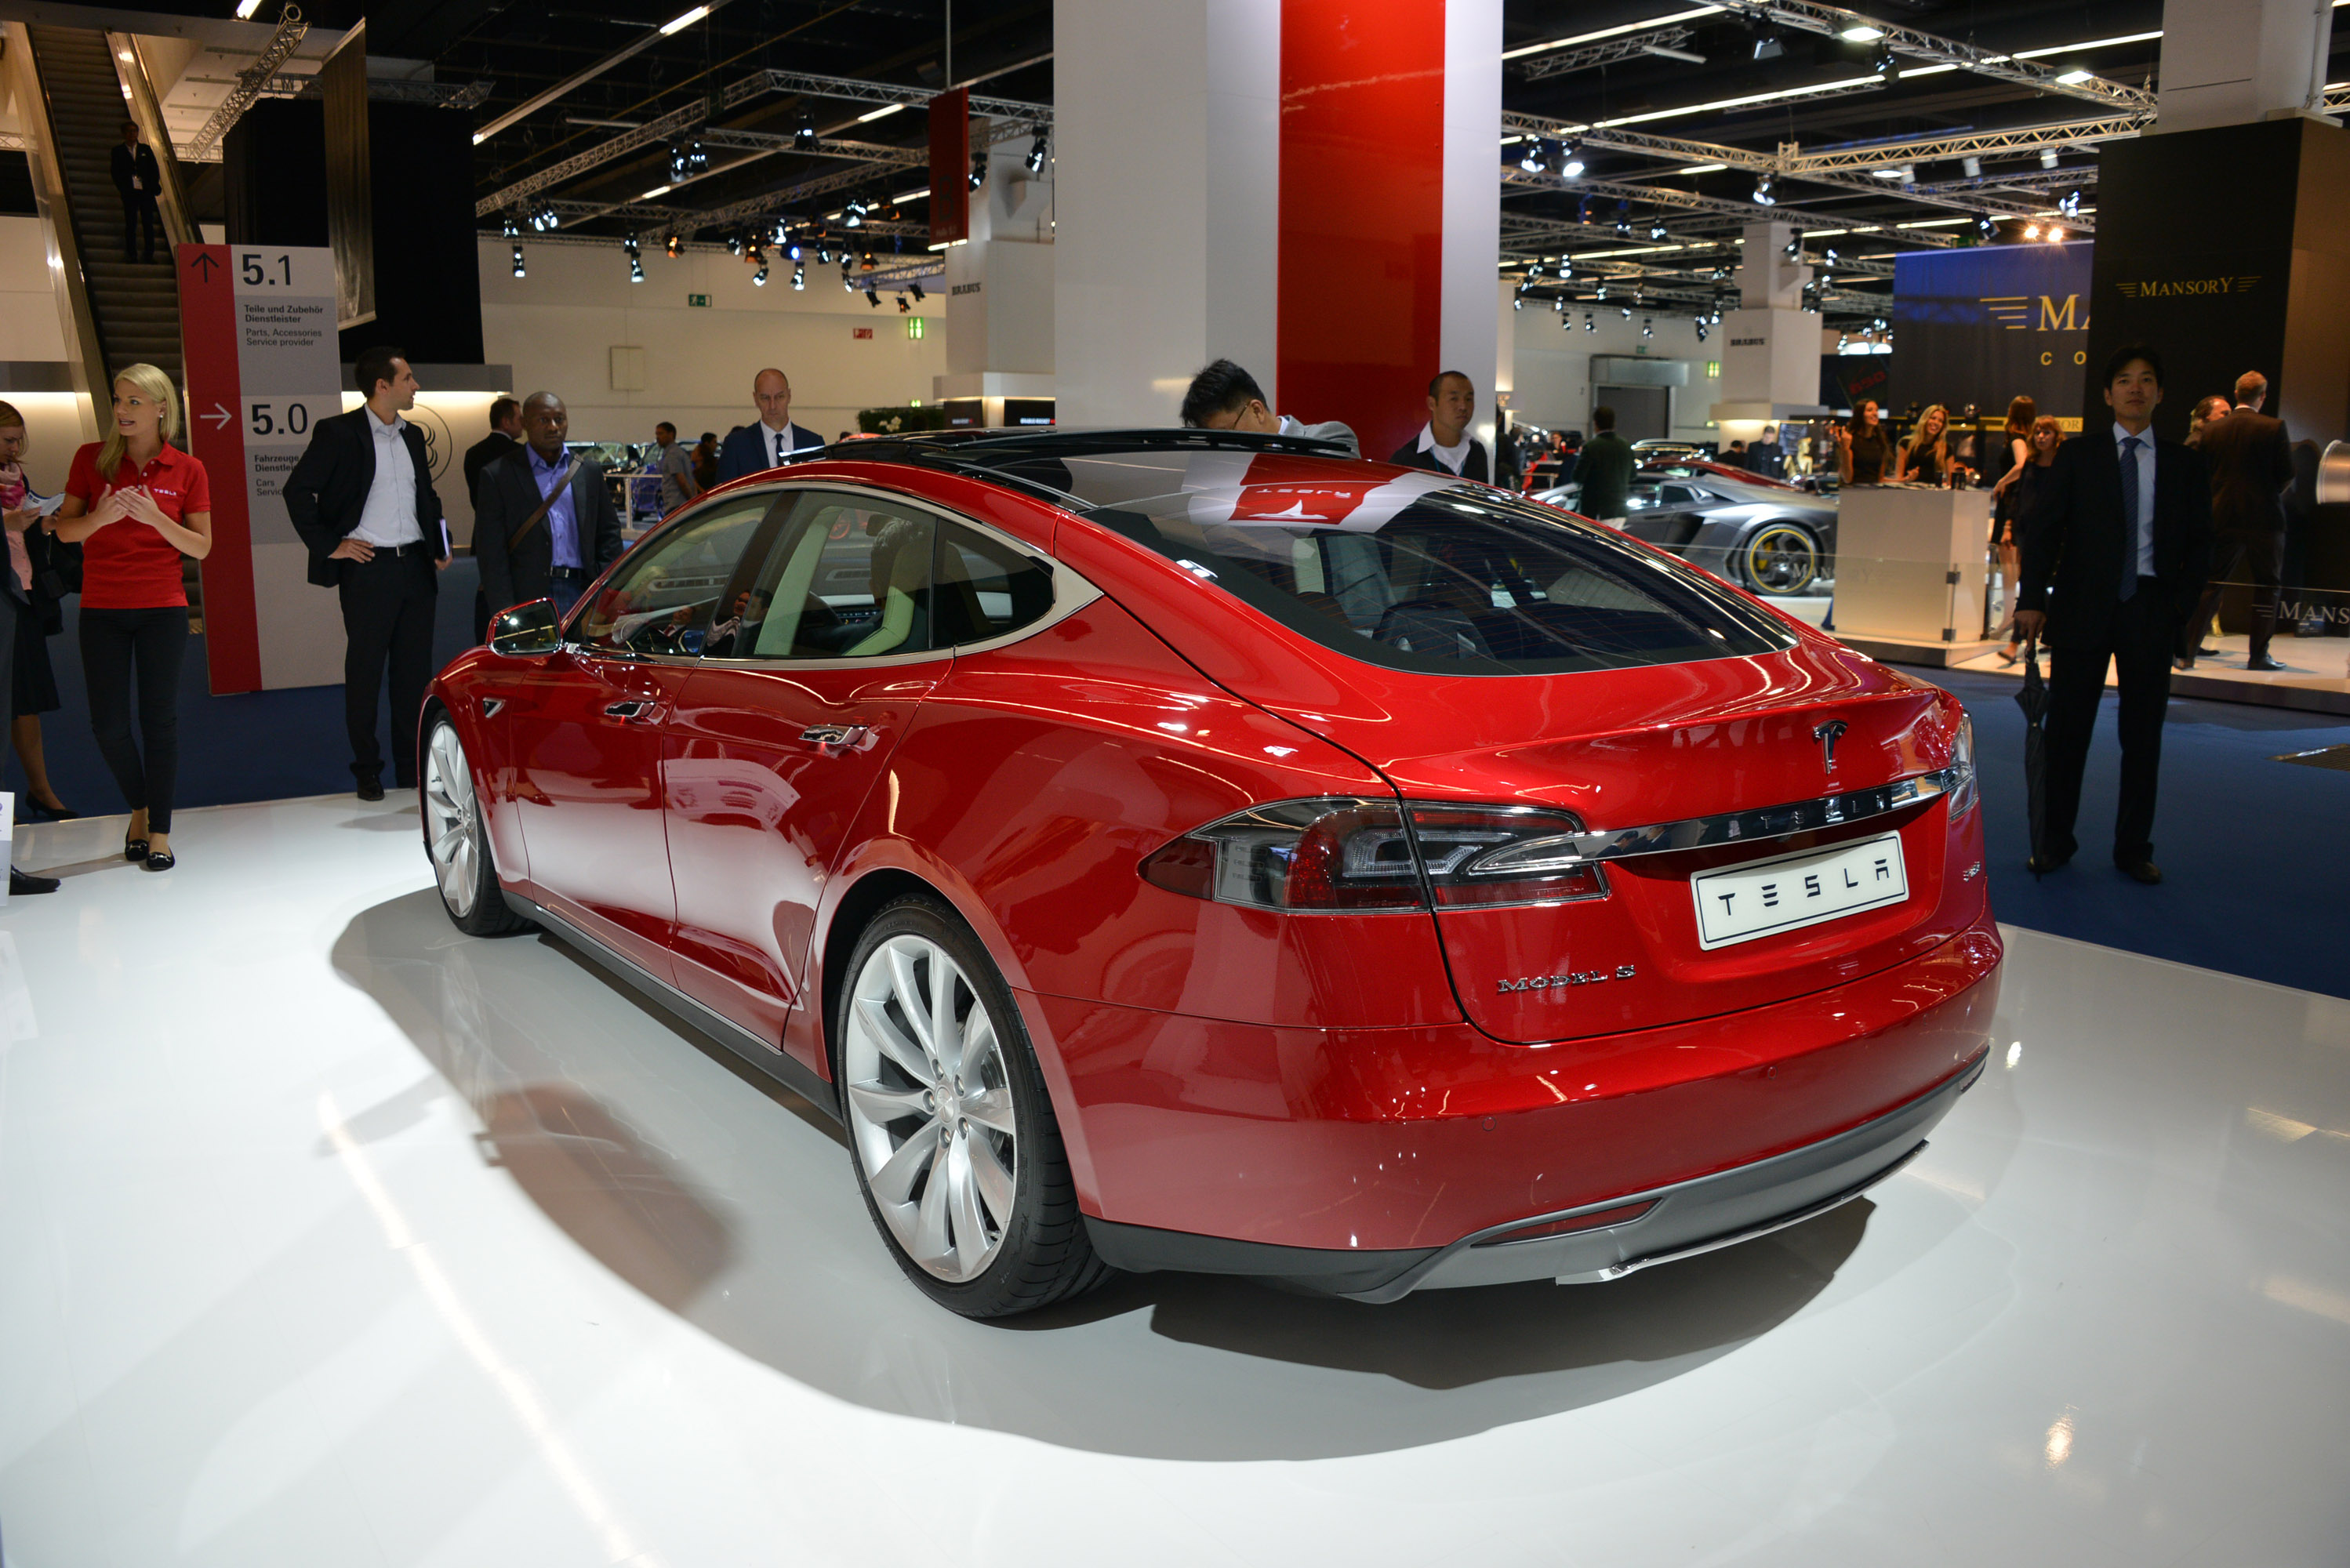 Tesla Model S Frankfurt